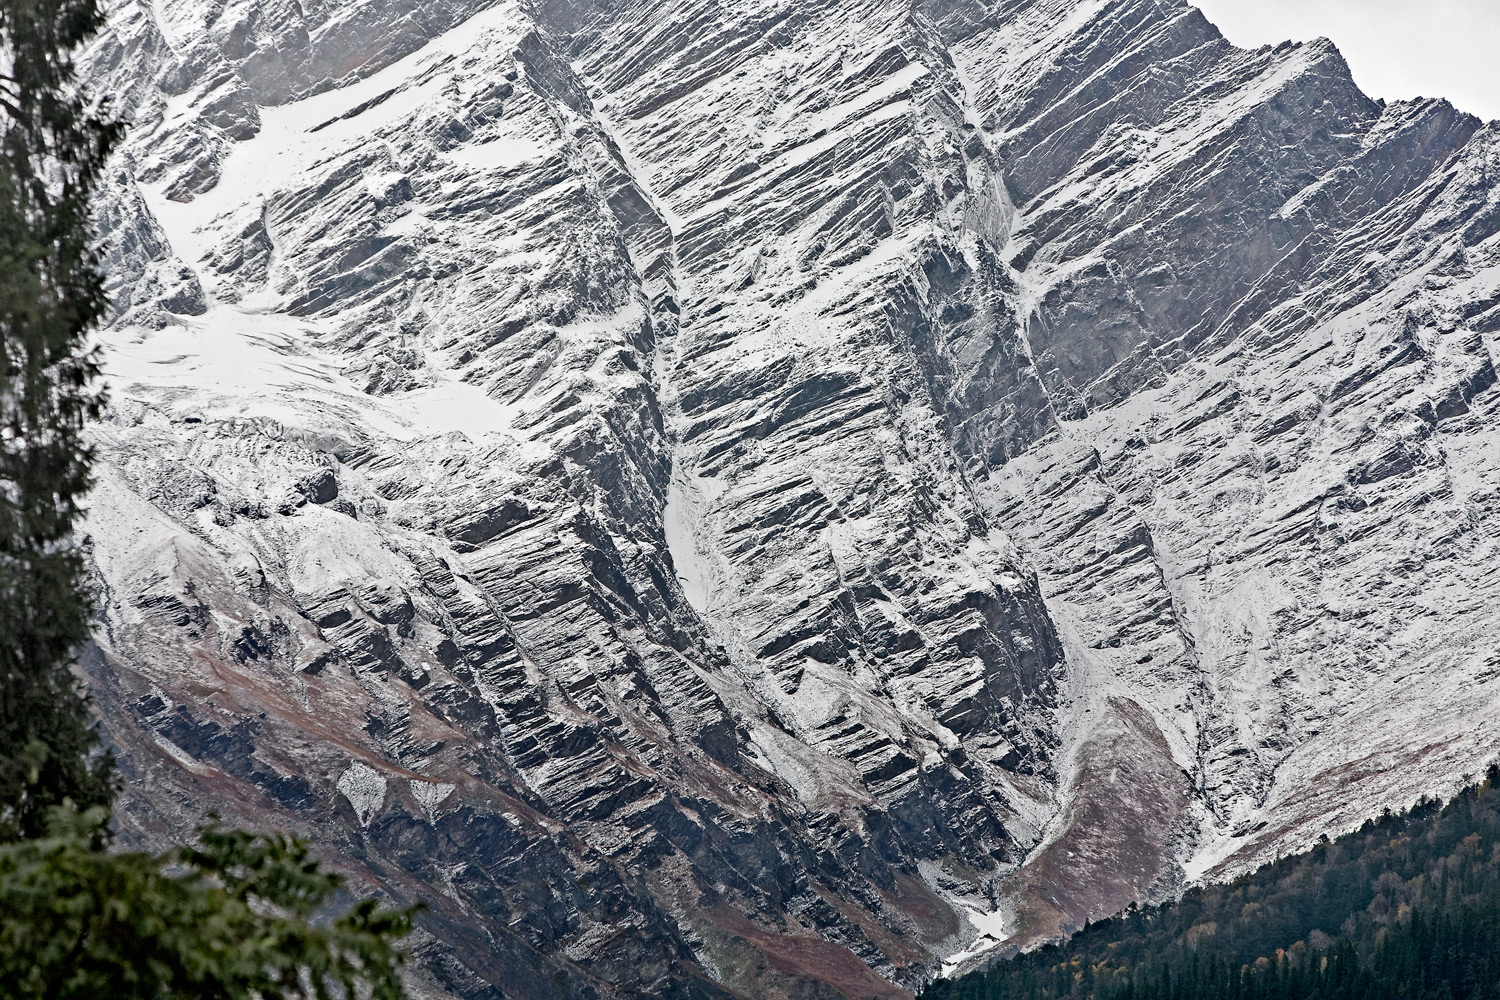 Mountain-scape near Solang, Himachal Pradesh, India